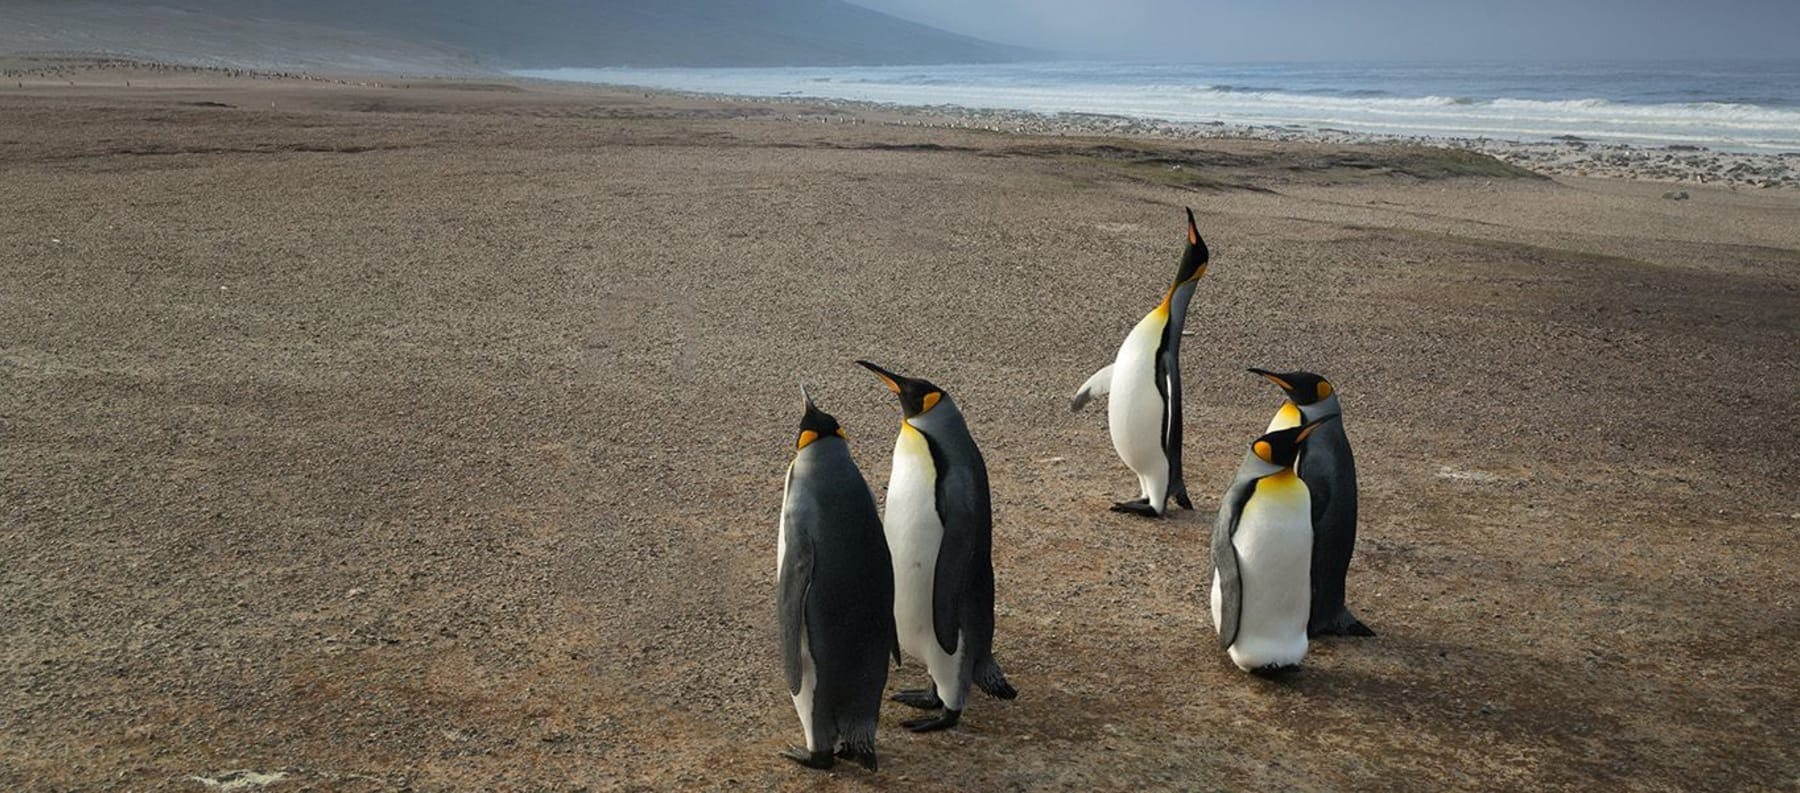 King Penguins in Falkland Islands (Malvinas)